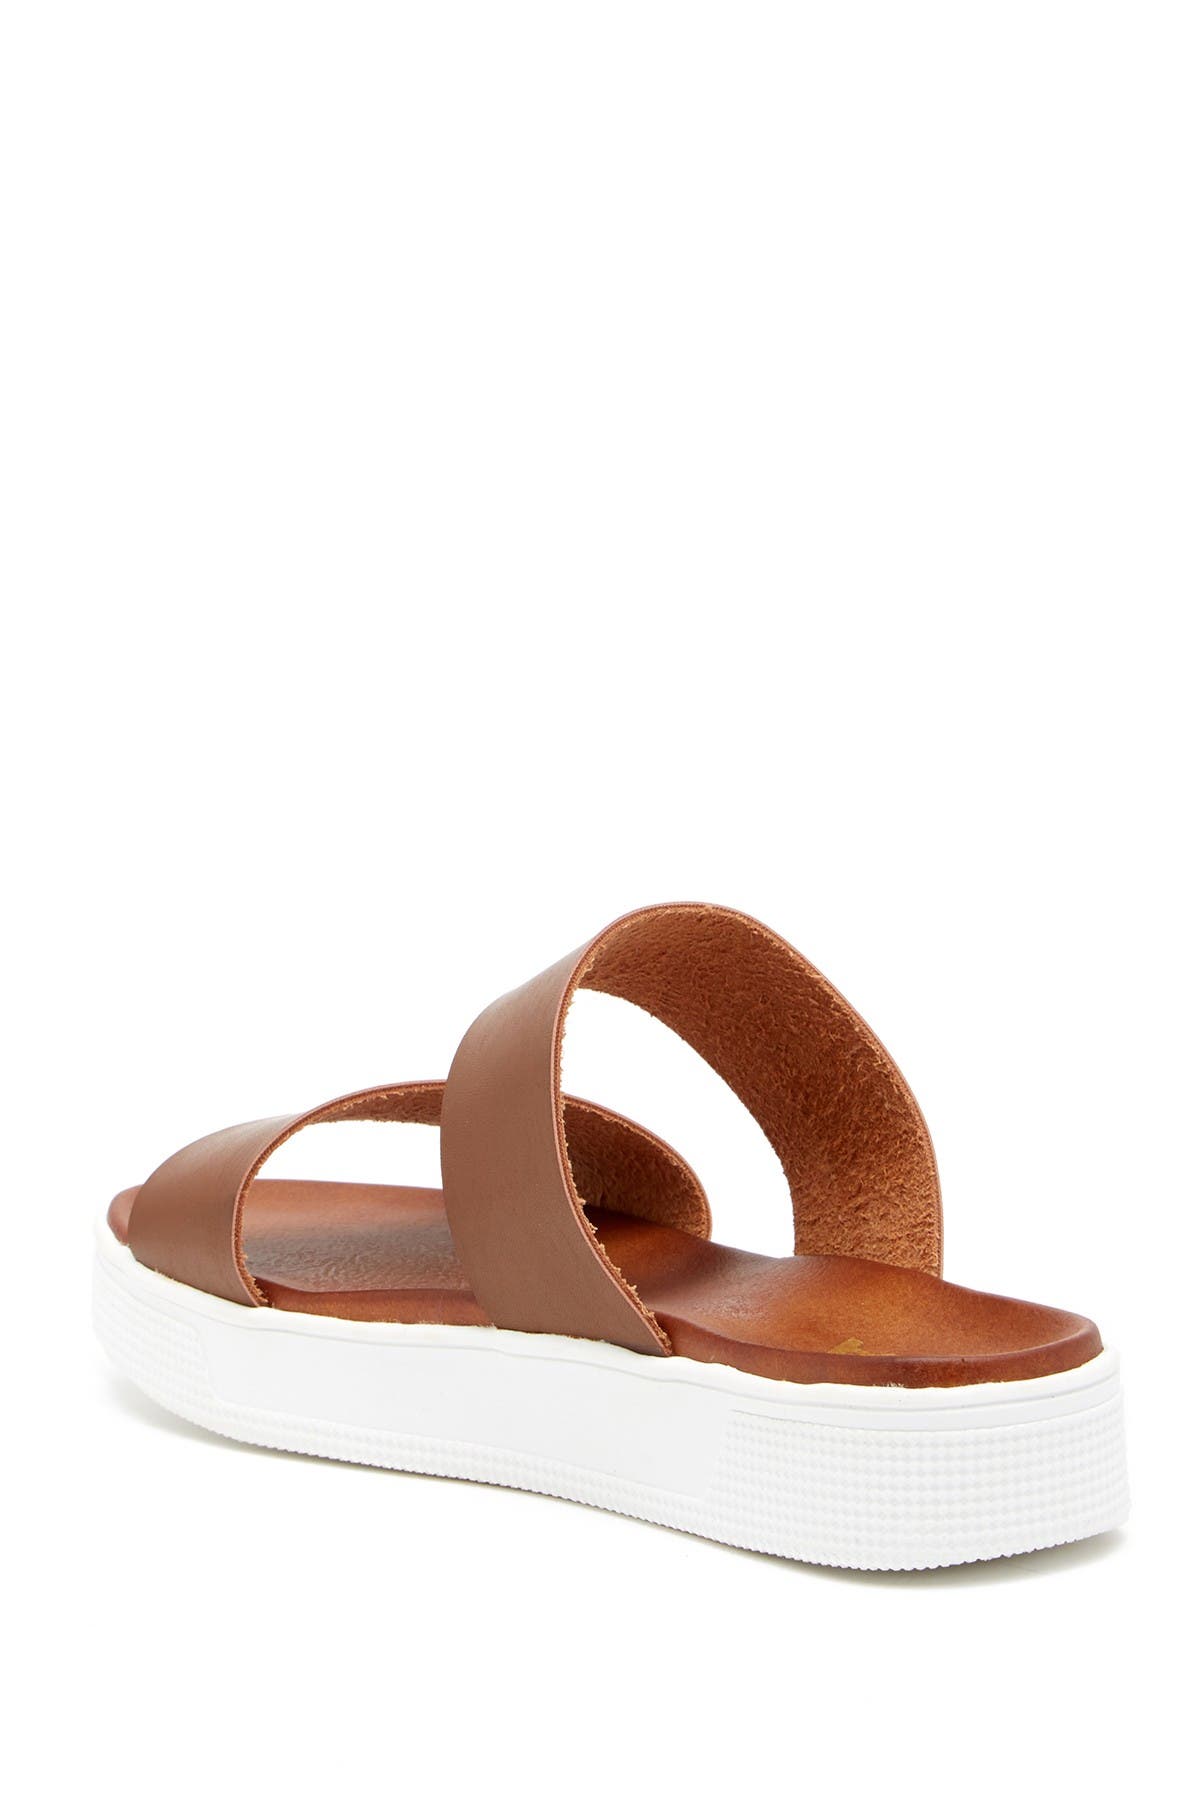 Mia Saige Platform Slide Sandal In Medium Brown5